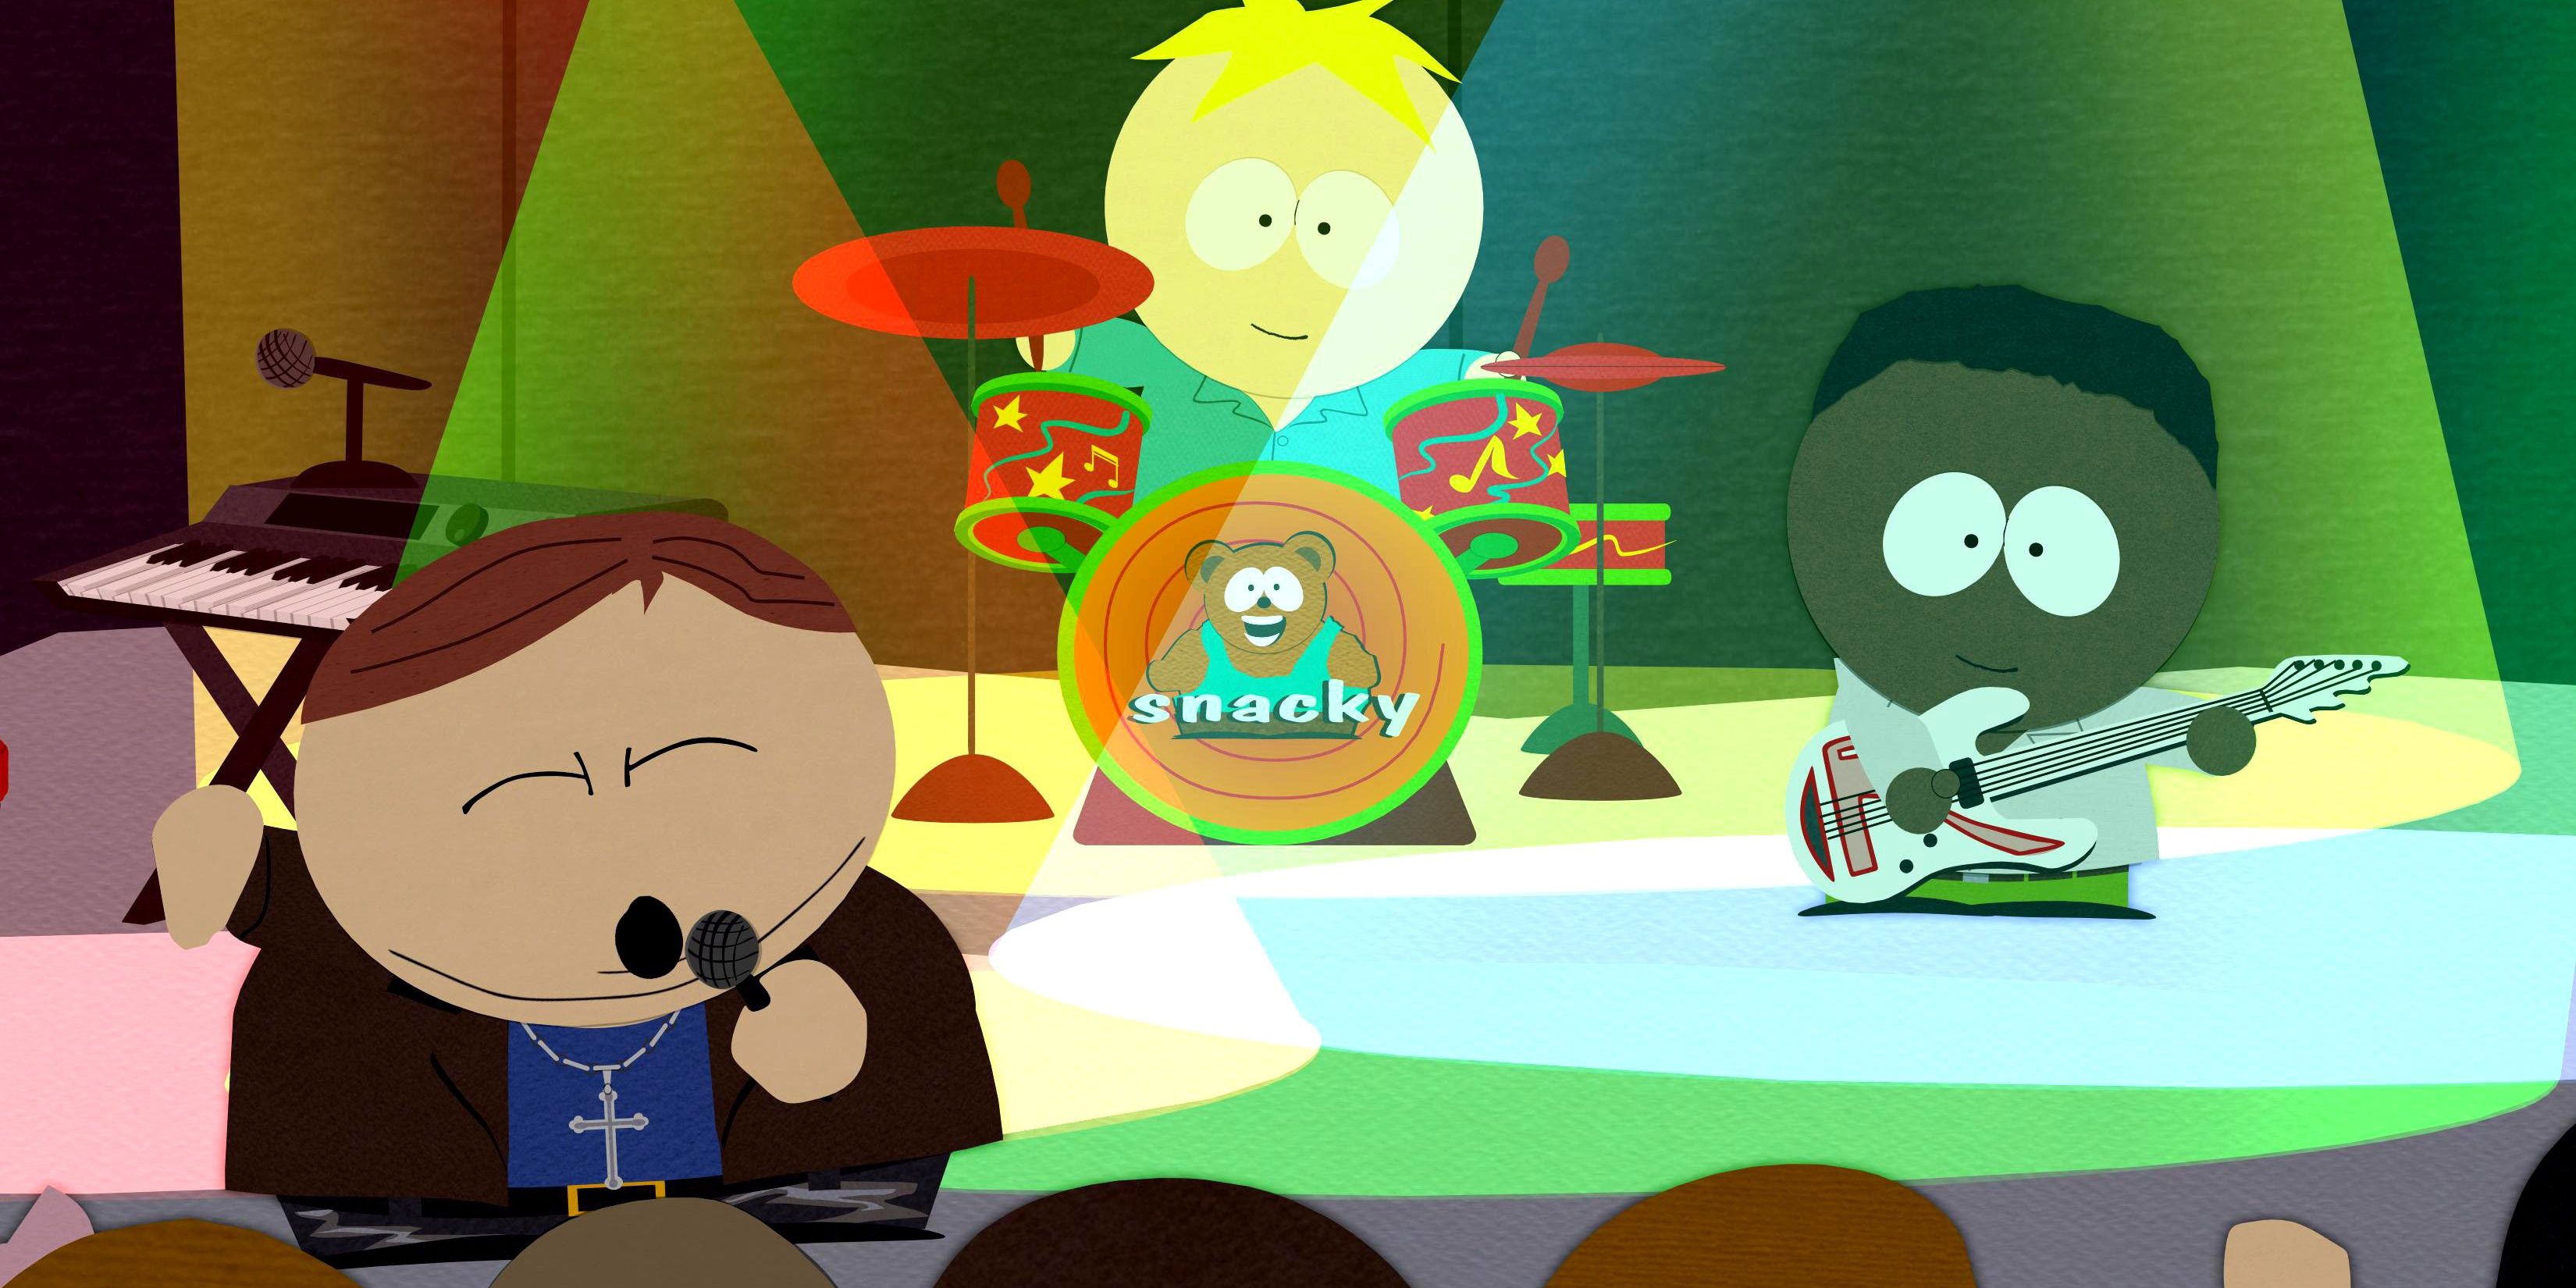 Christian Rock Hard, a South Park episode